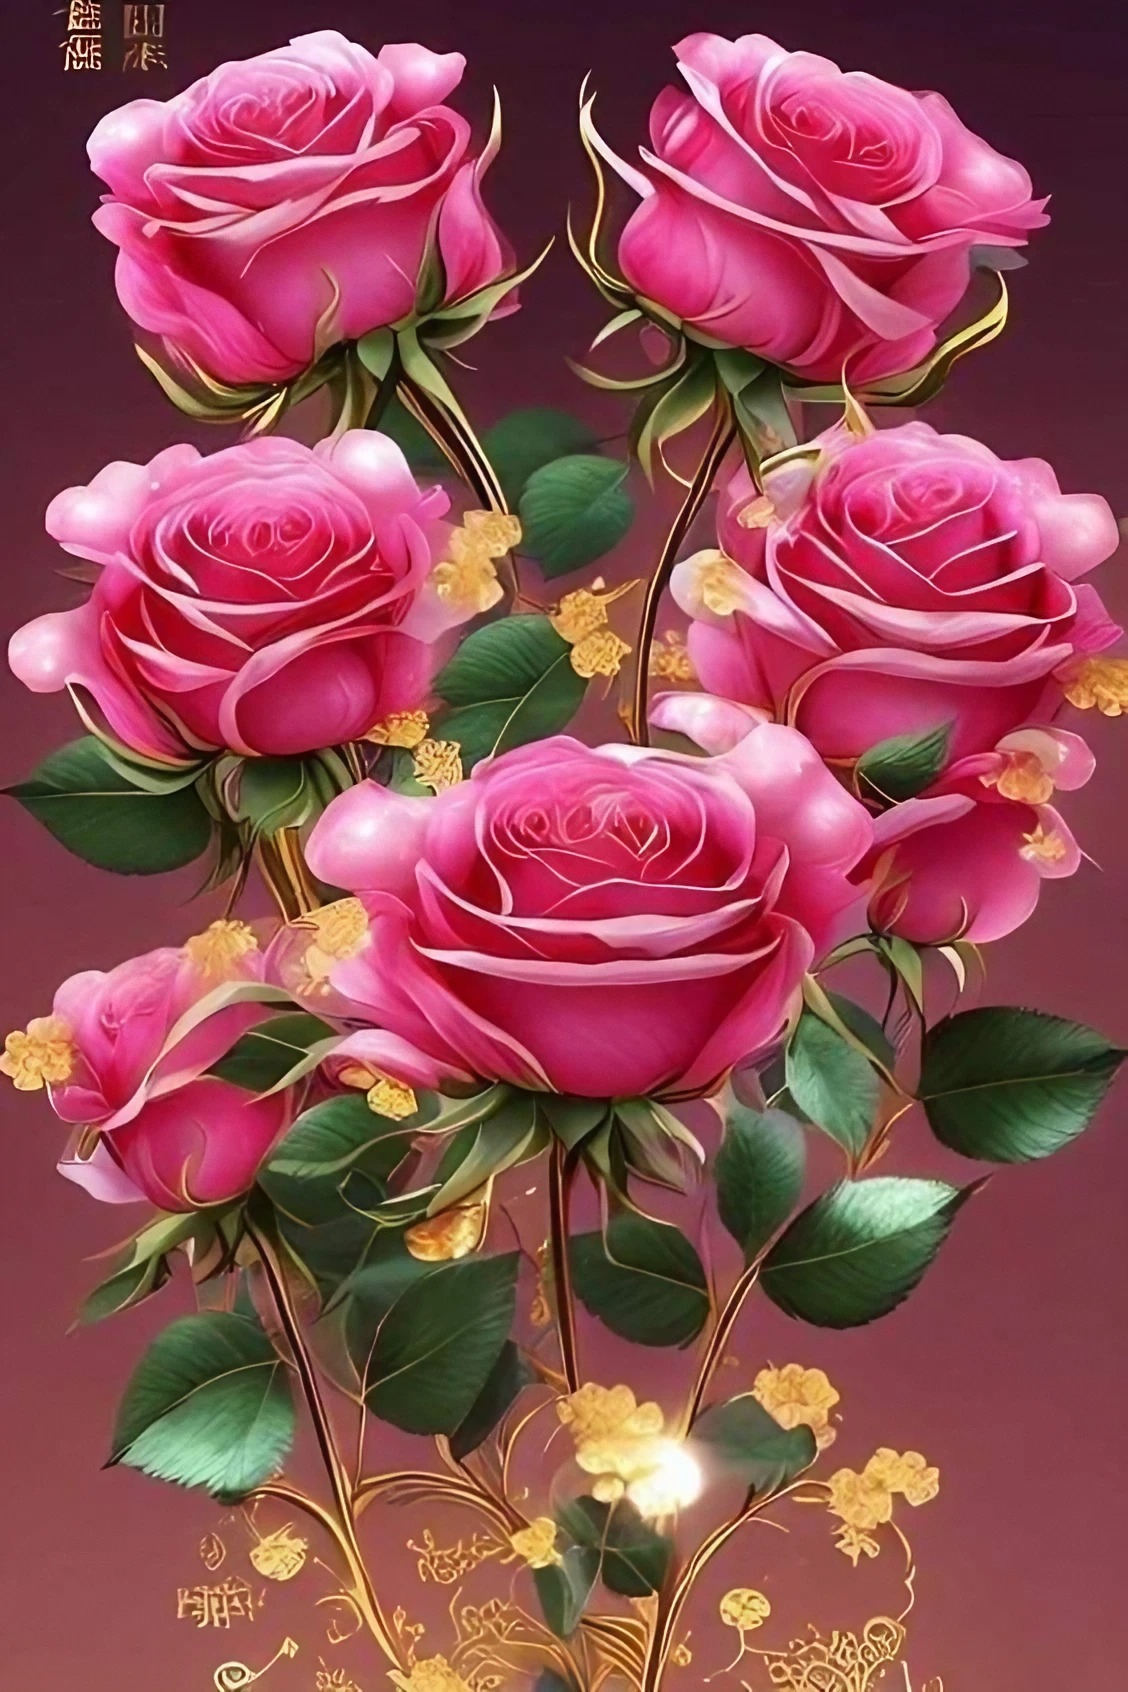 Gulab Ke Phool Wala - Bouquet Of Pink Roses